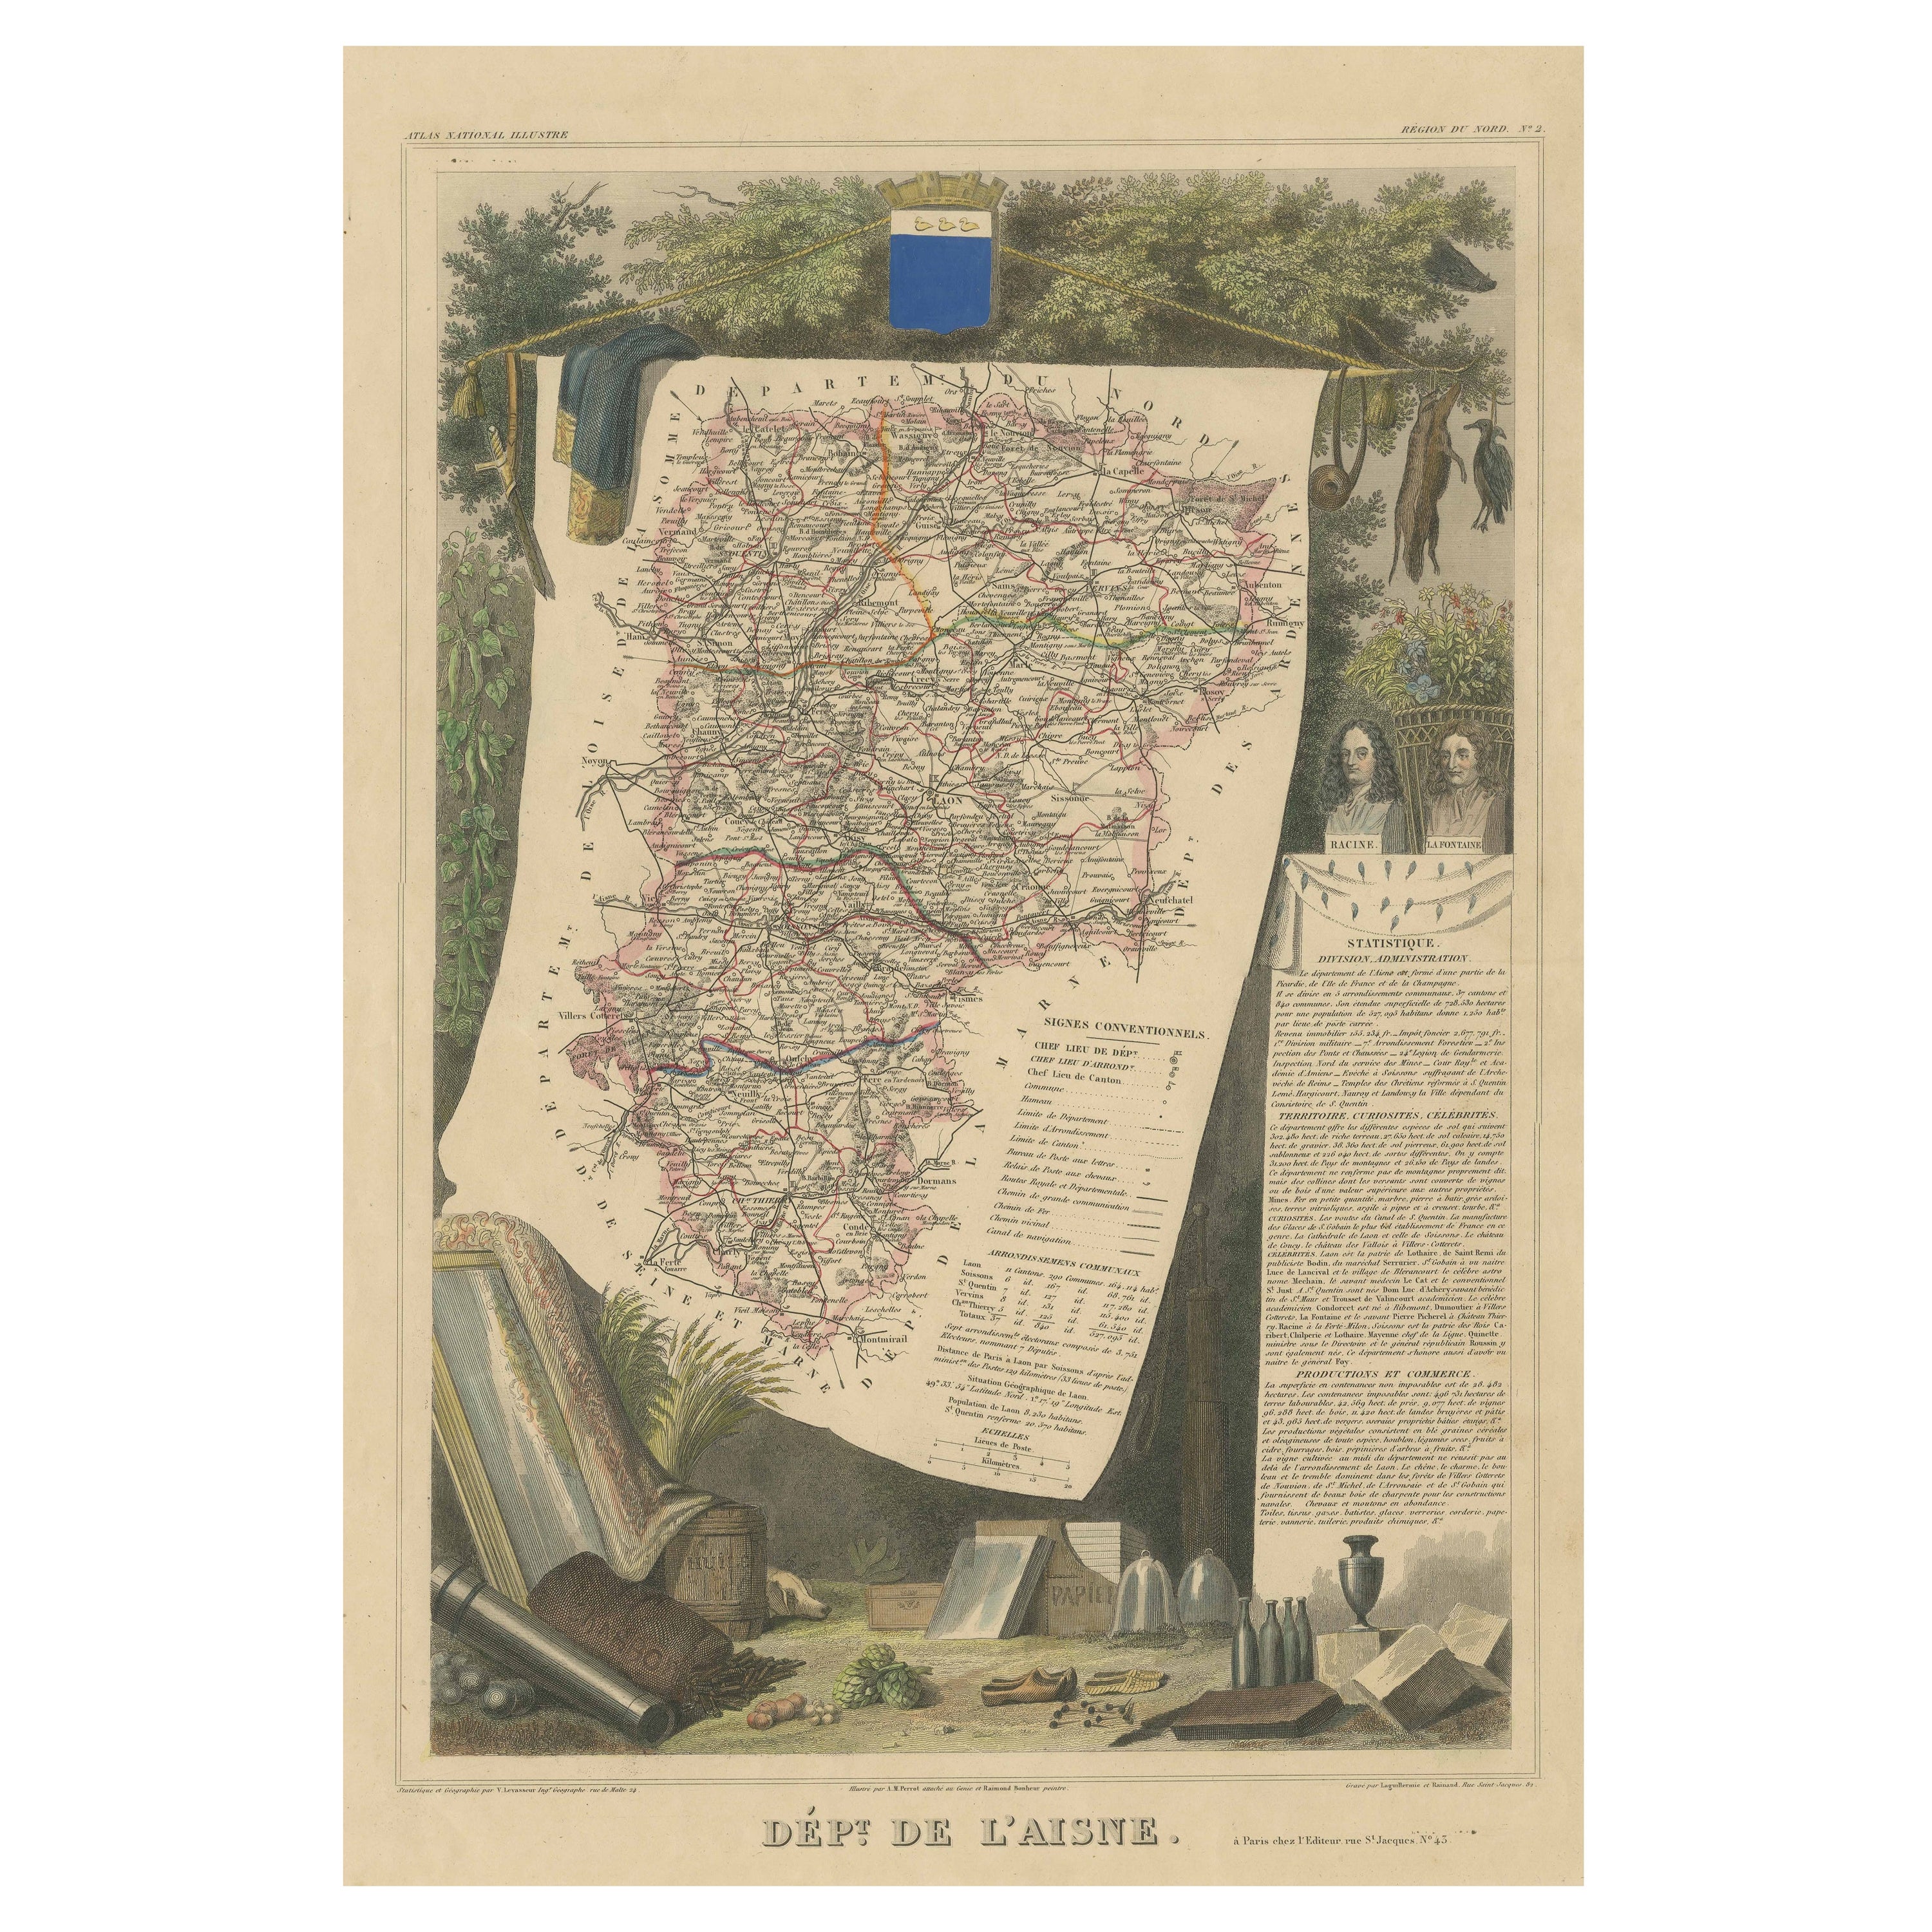 Handkolorierte antike Karte des Departements L''aisne, Frankreich